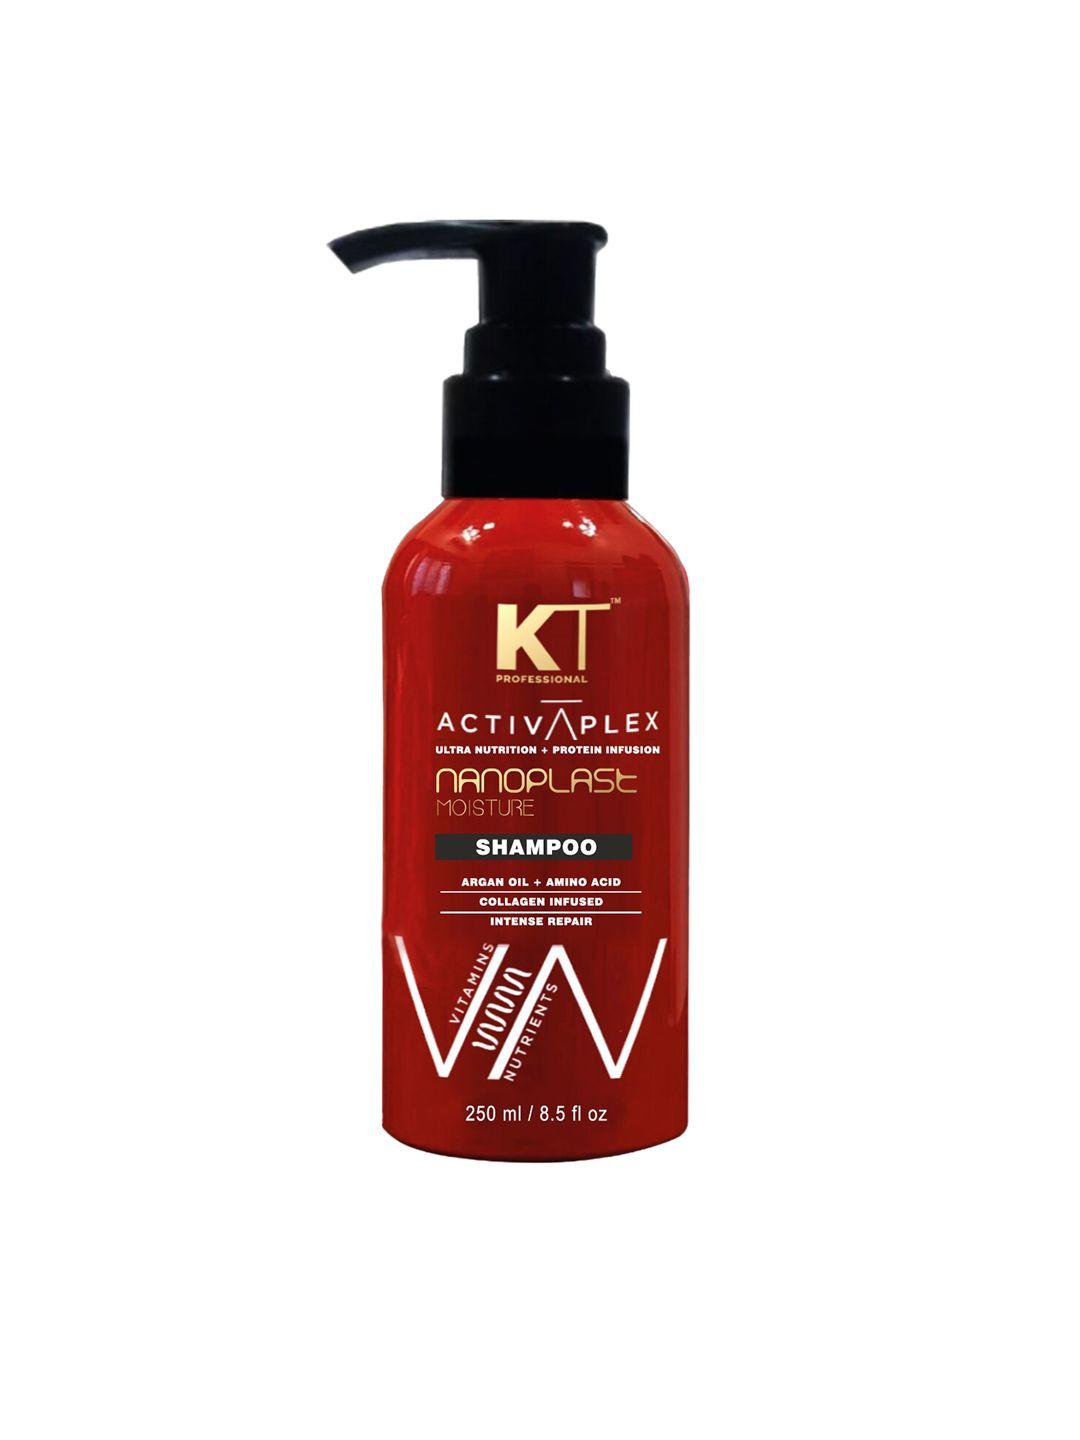 kehairtherapy professional activaplex nanoplast moisture shampoo - 250ml